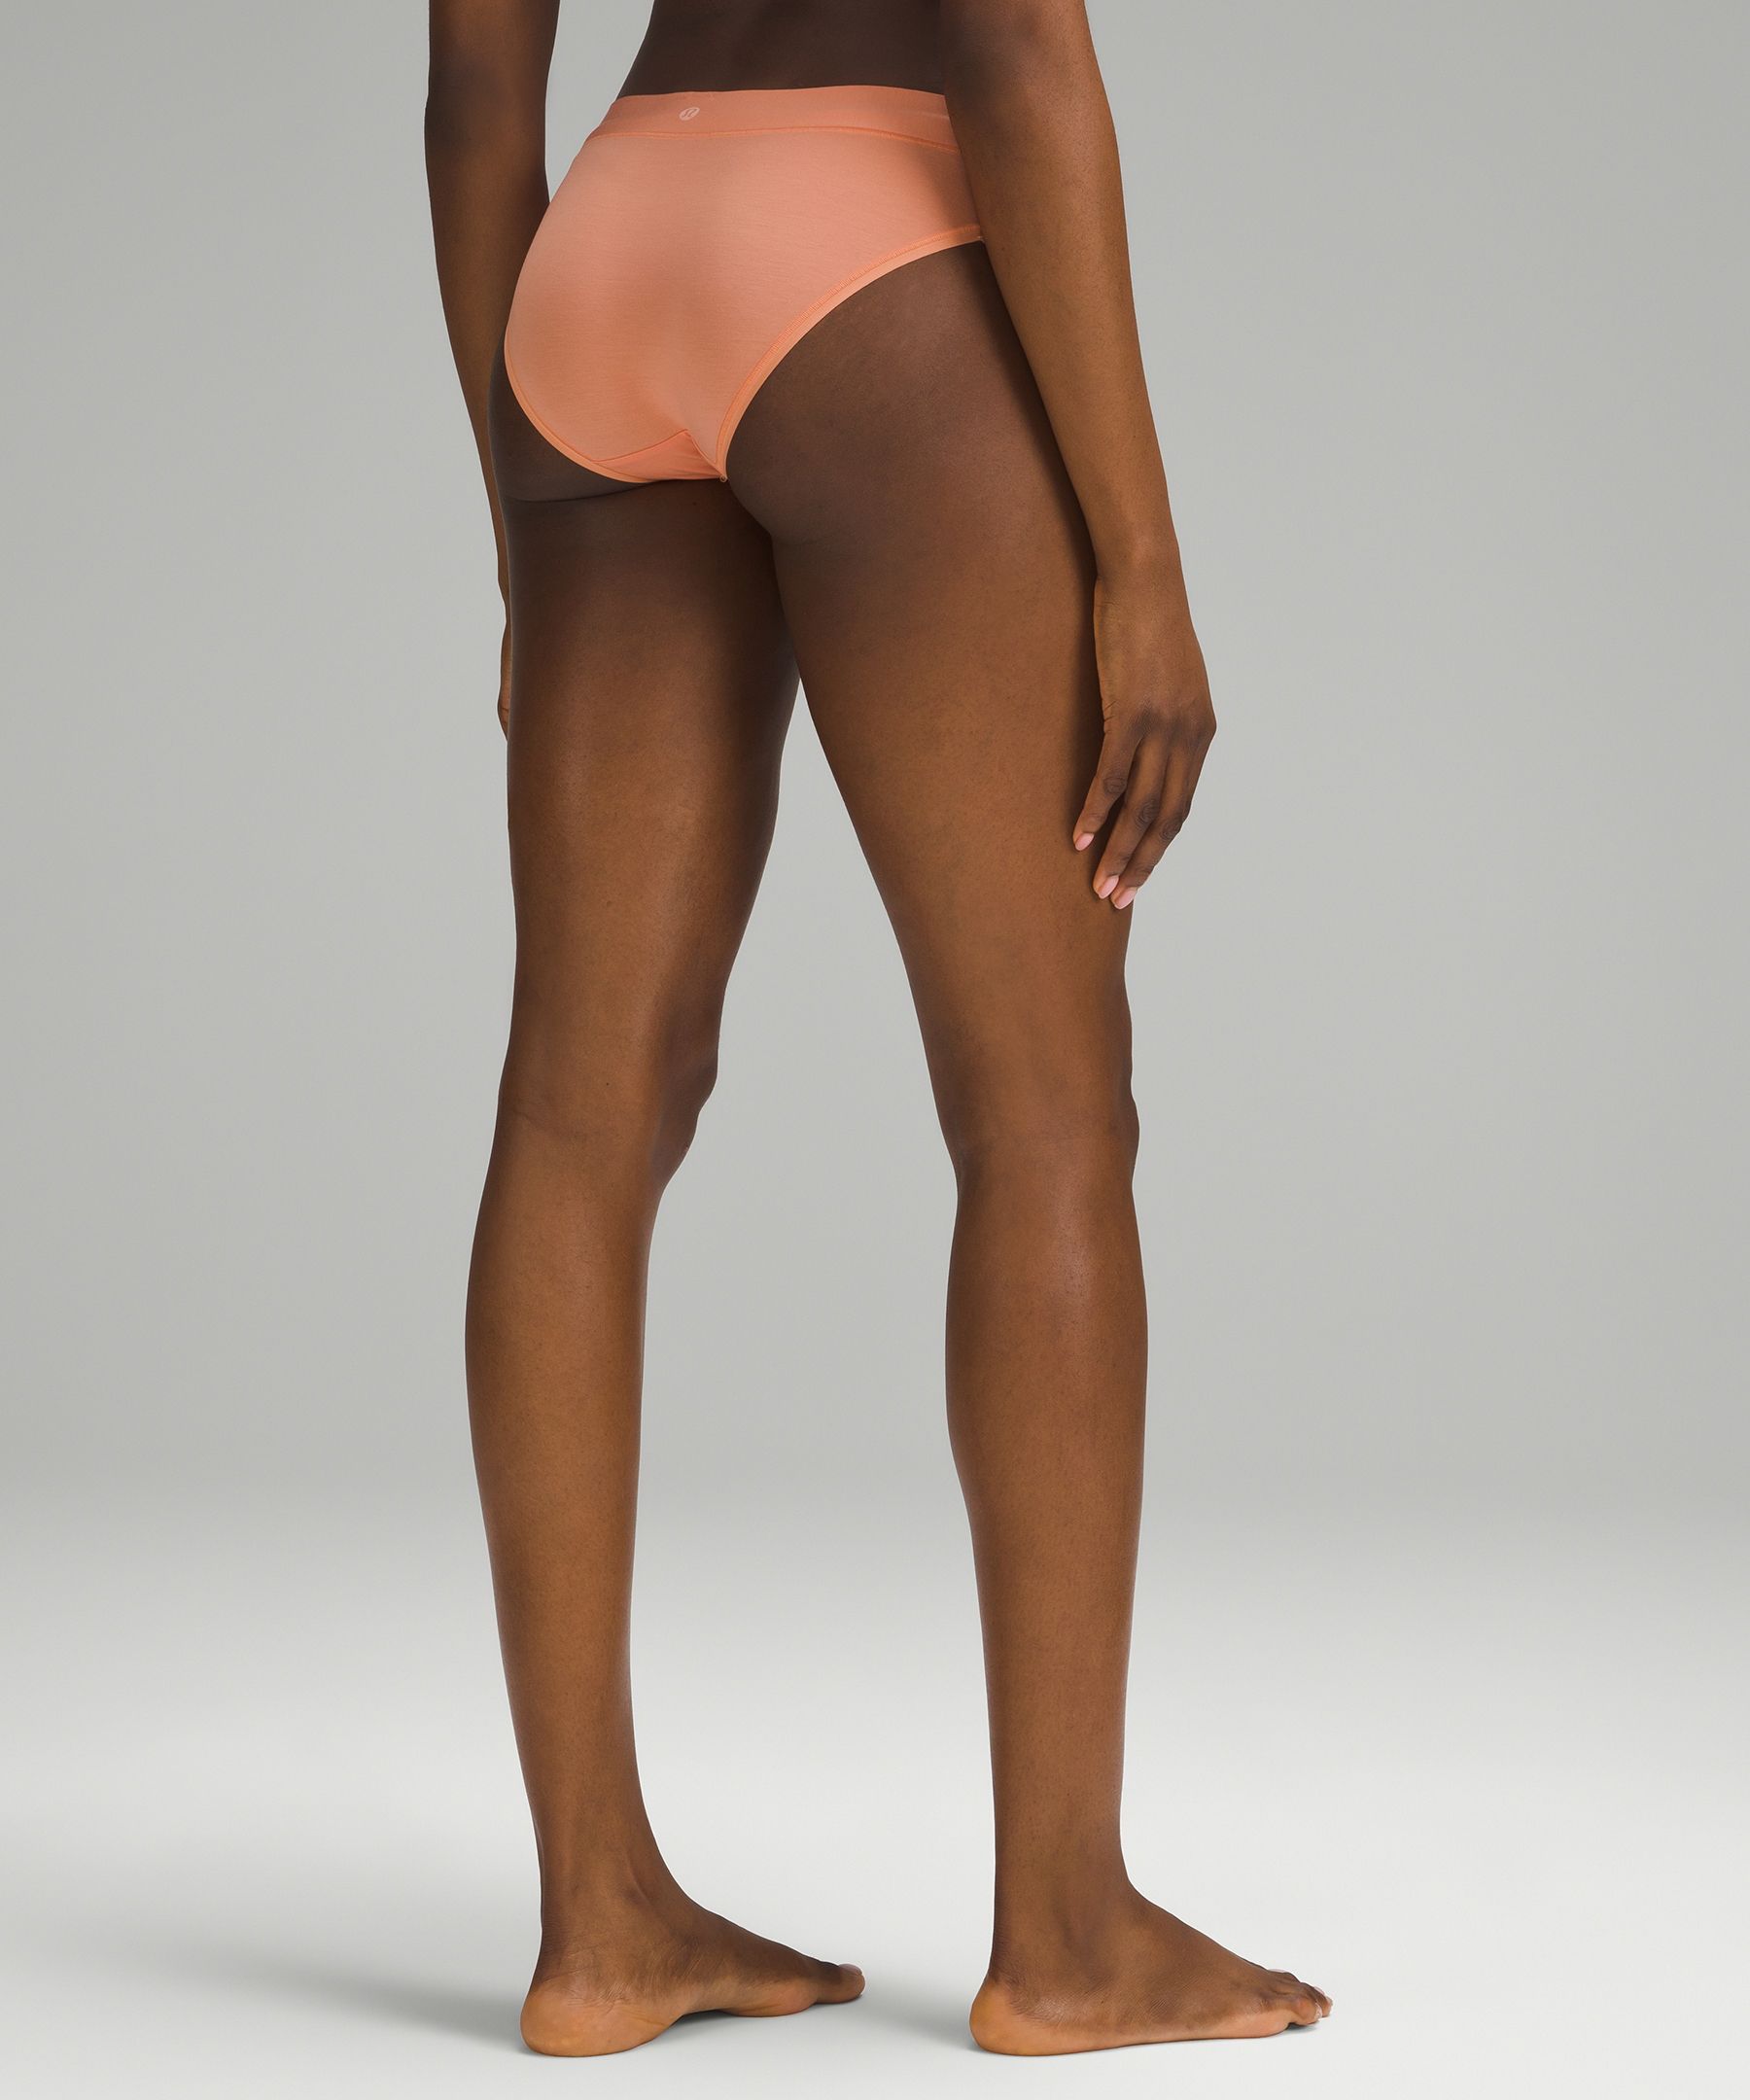 Lululemon Underwear Outlet South Africa - Dusty Bronze Womens